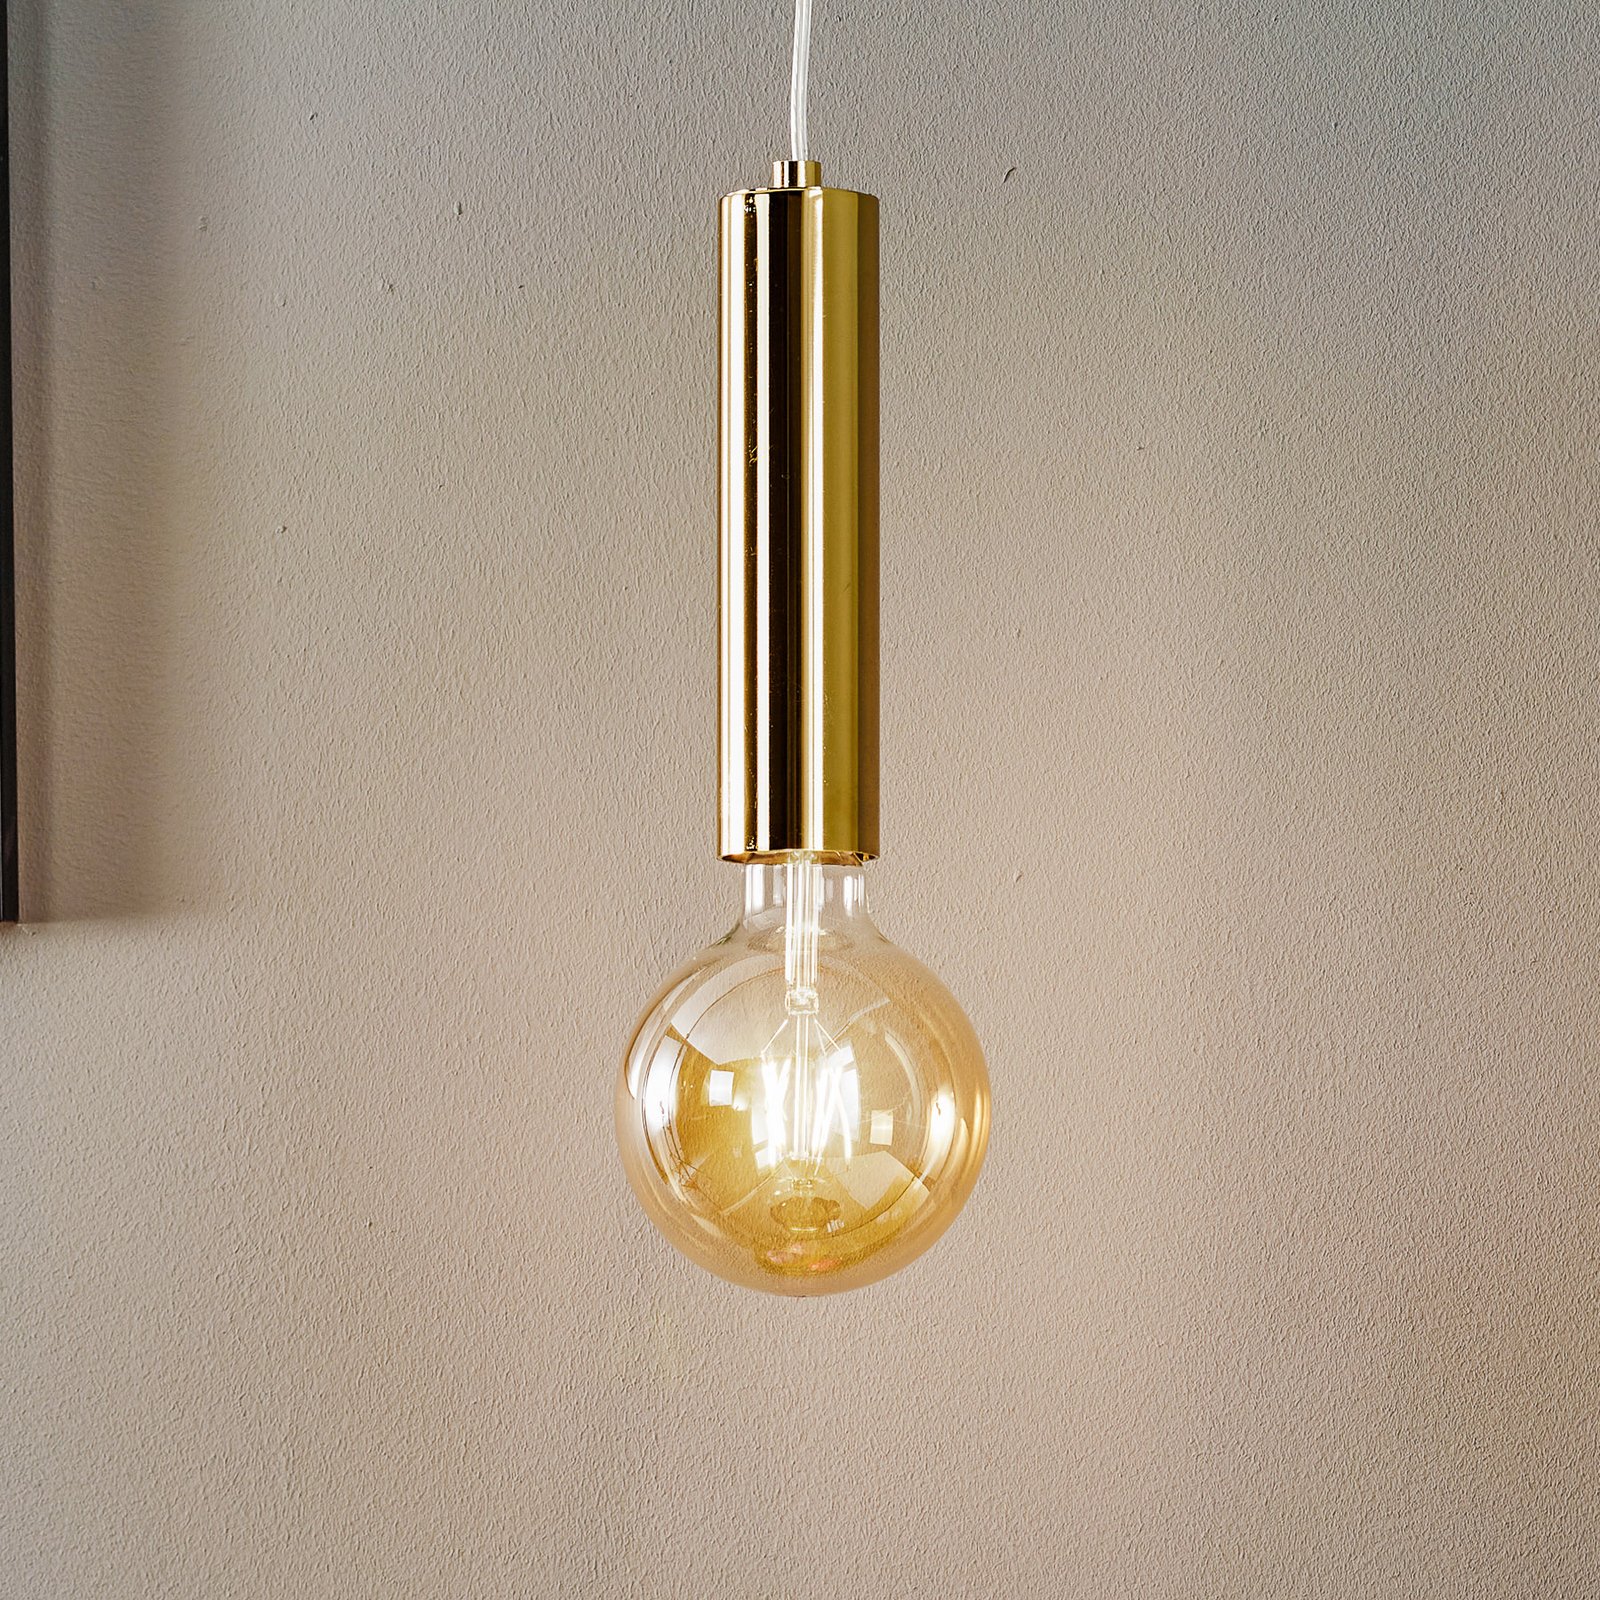 Jazz pendant light, one-bulb, brass